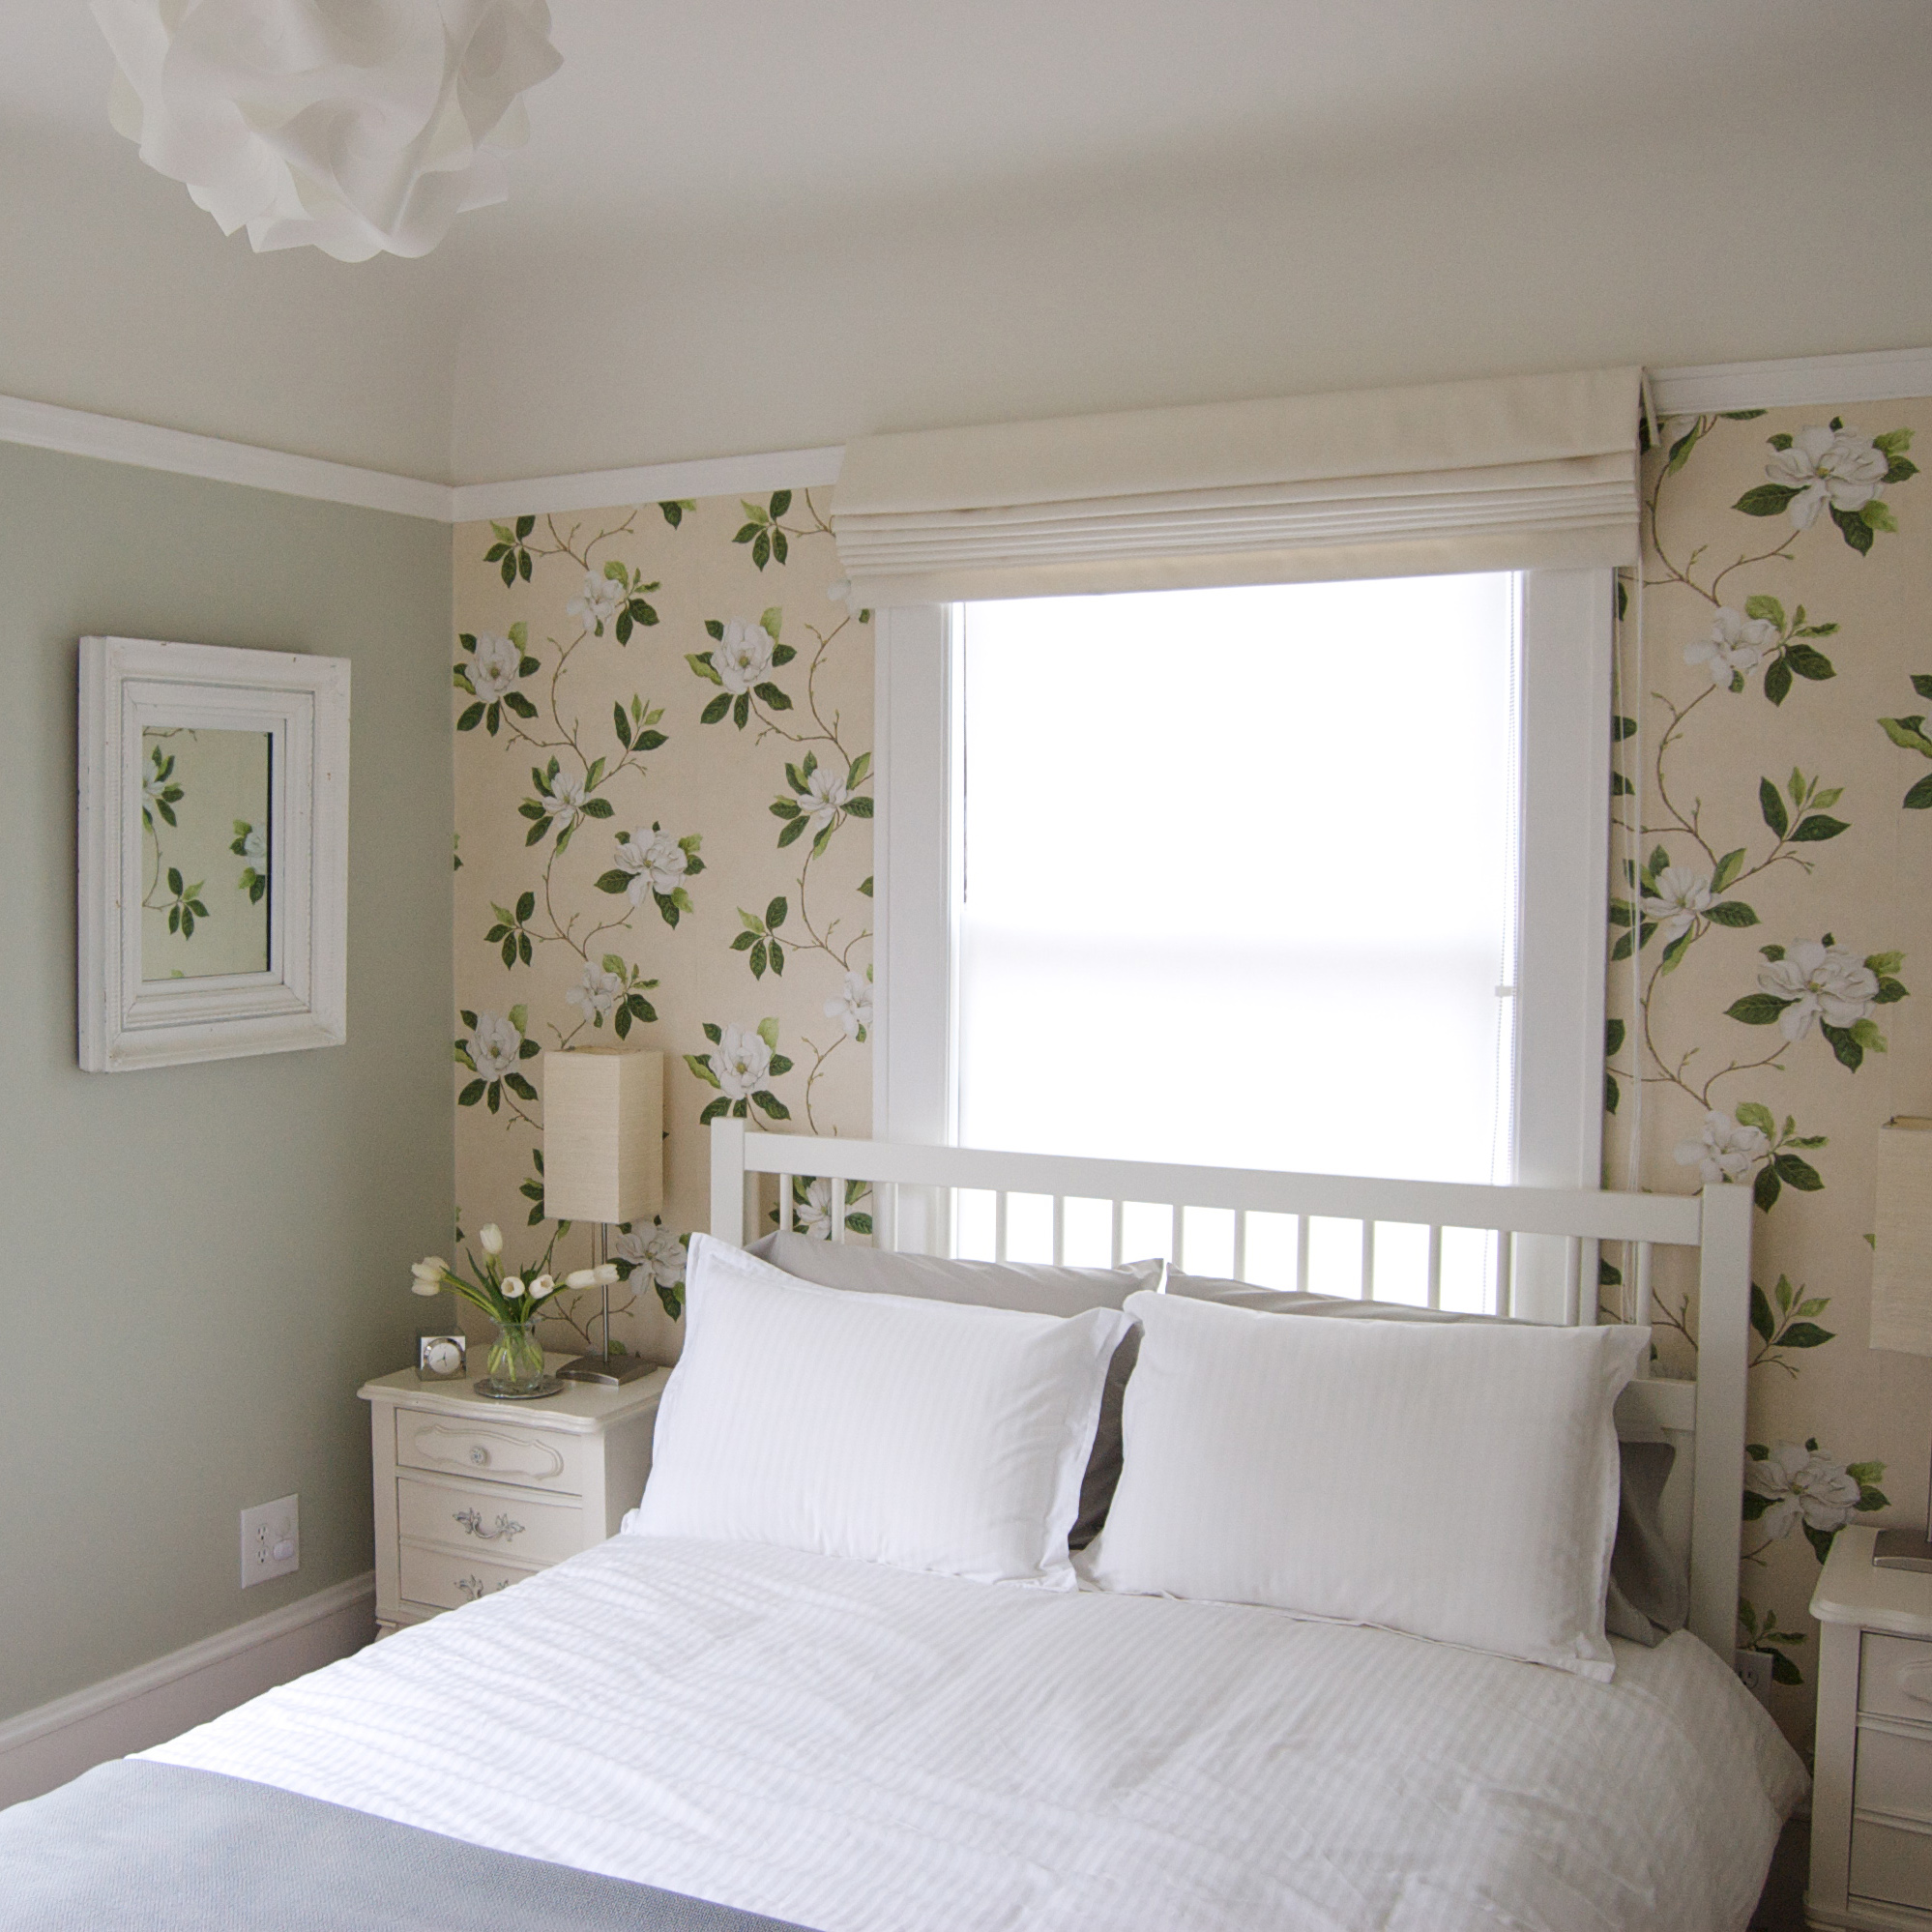 wallpaper for bedroom walls designs,bedroom,room,bed,furniture,property